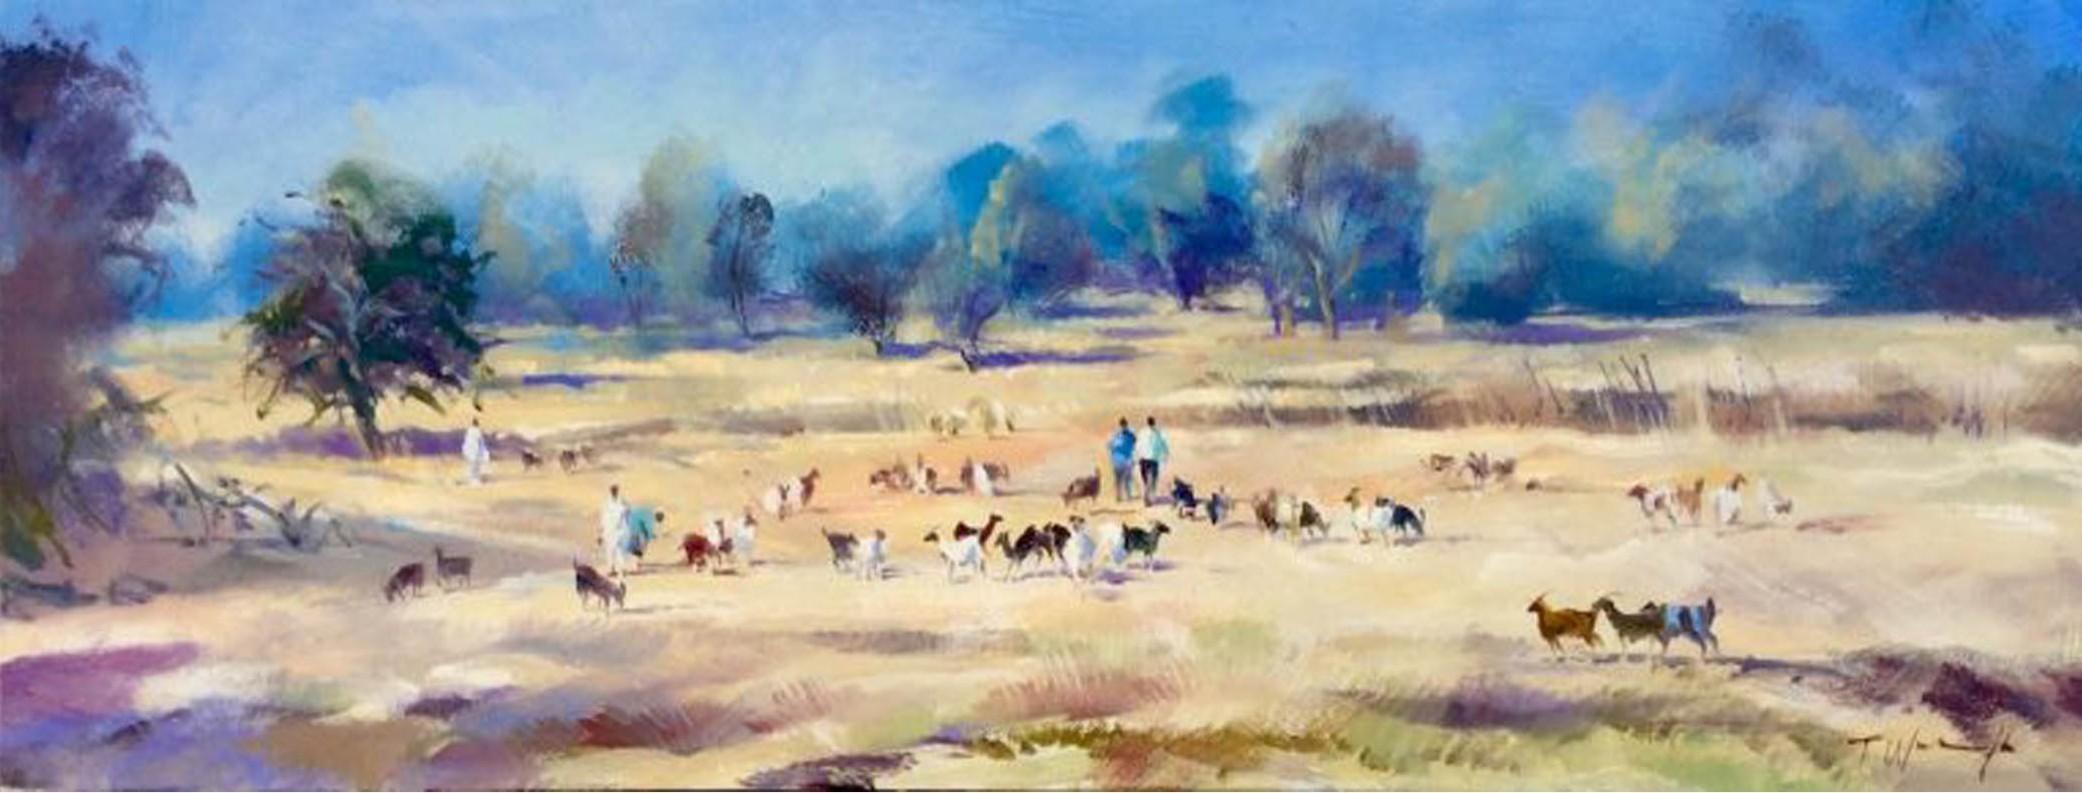 Goat Herders, Morocco